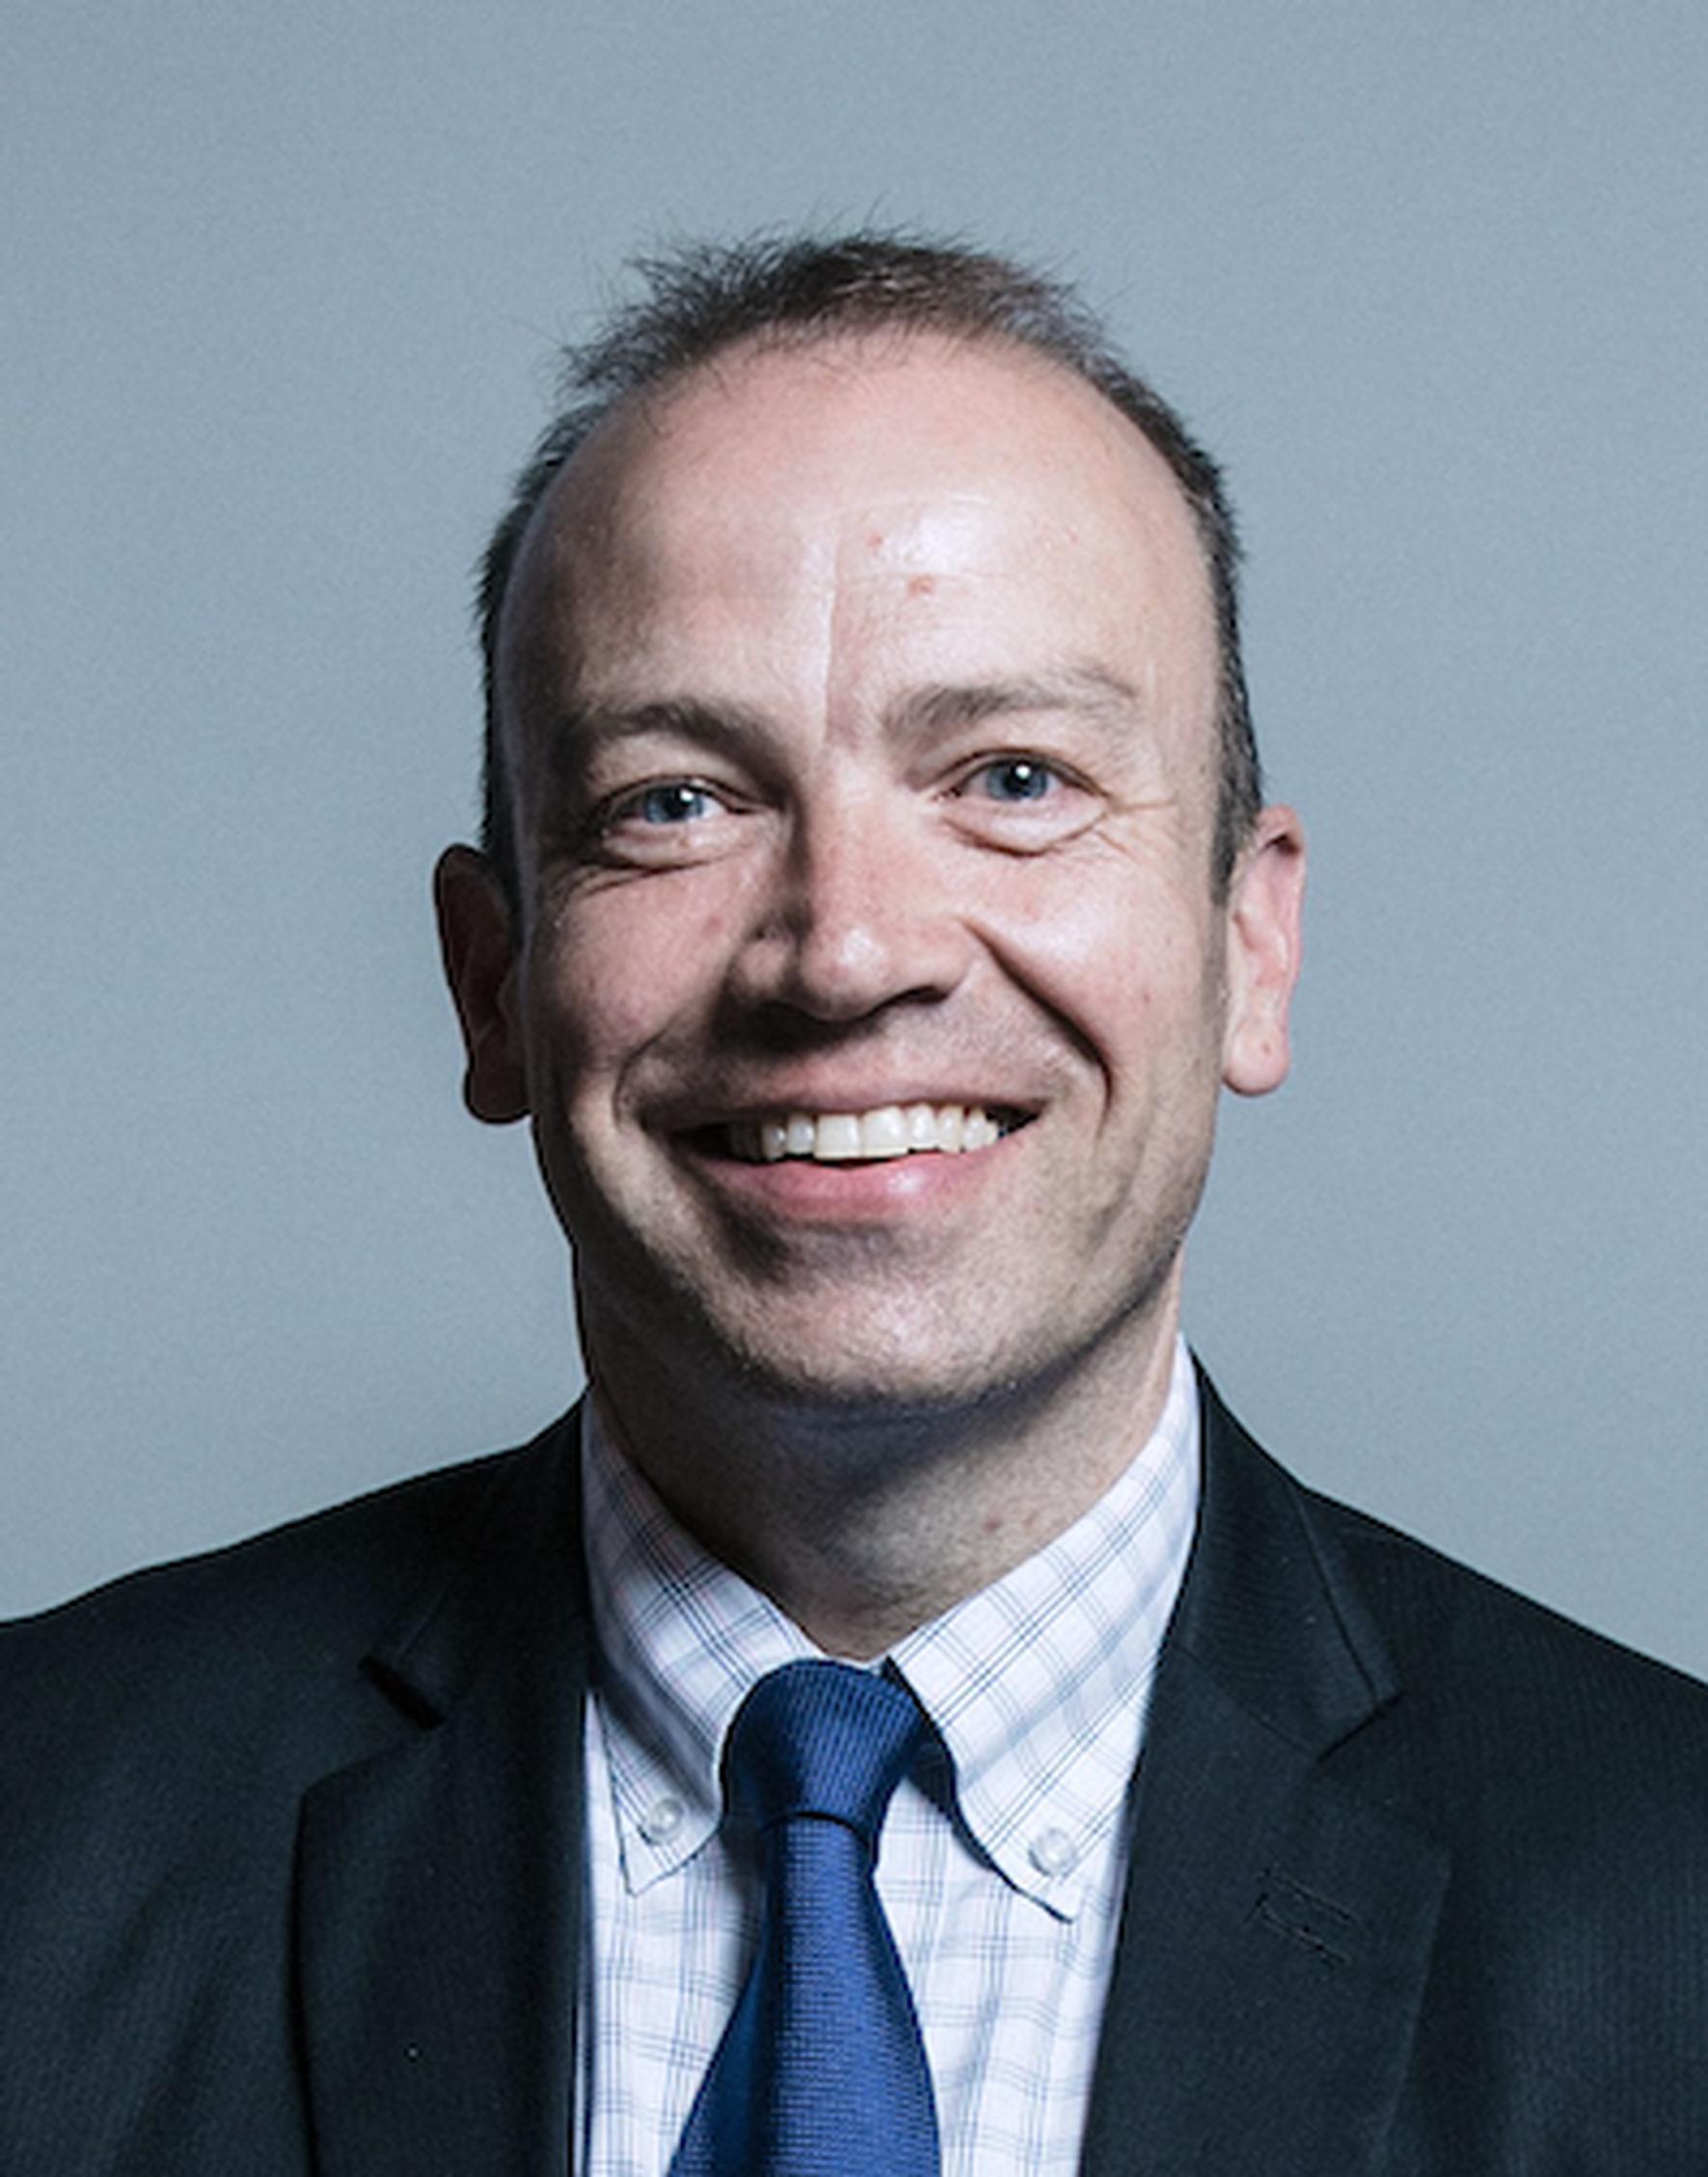 Transport minister Chris Heaton-Harris